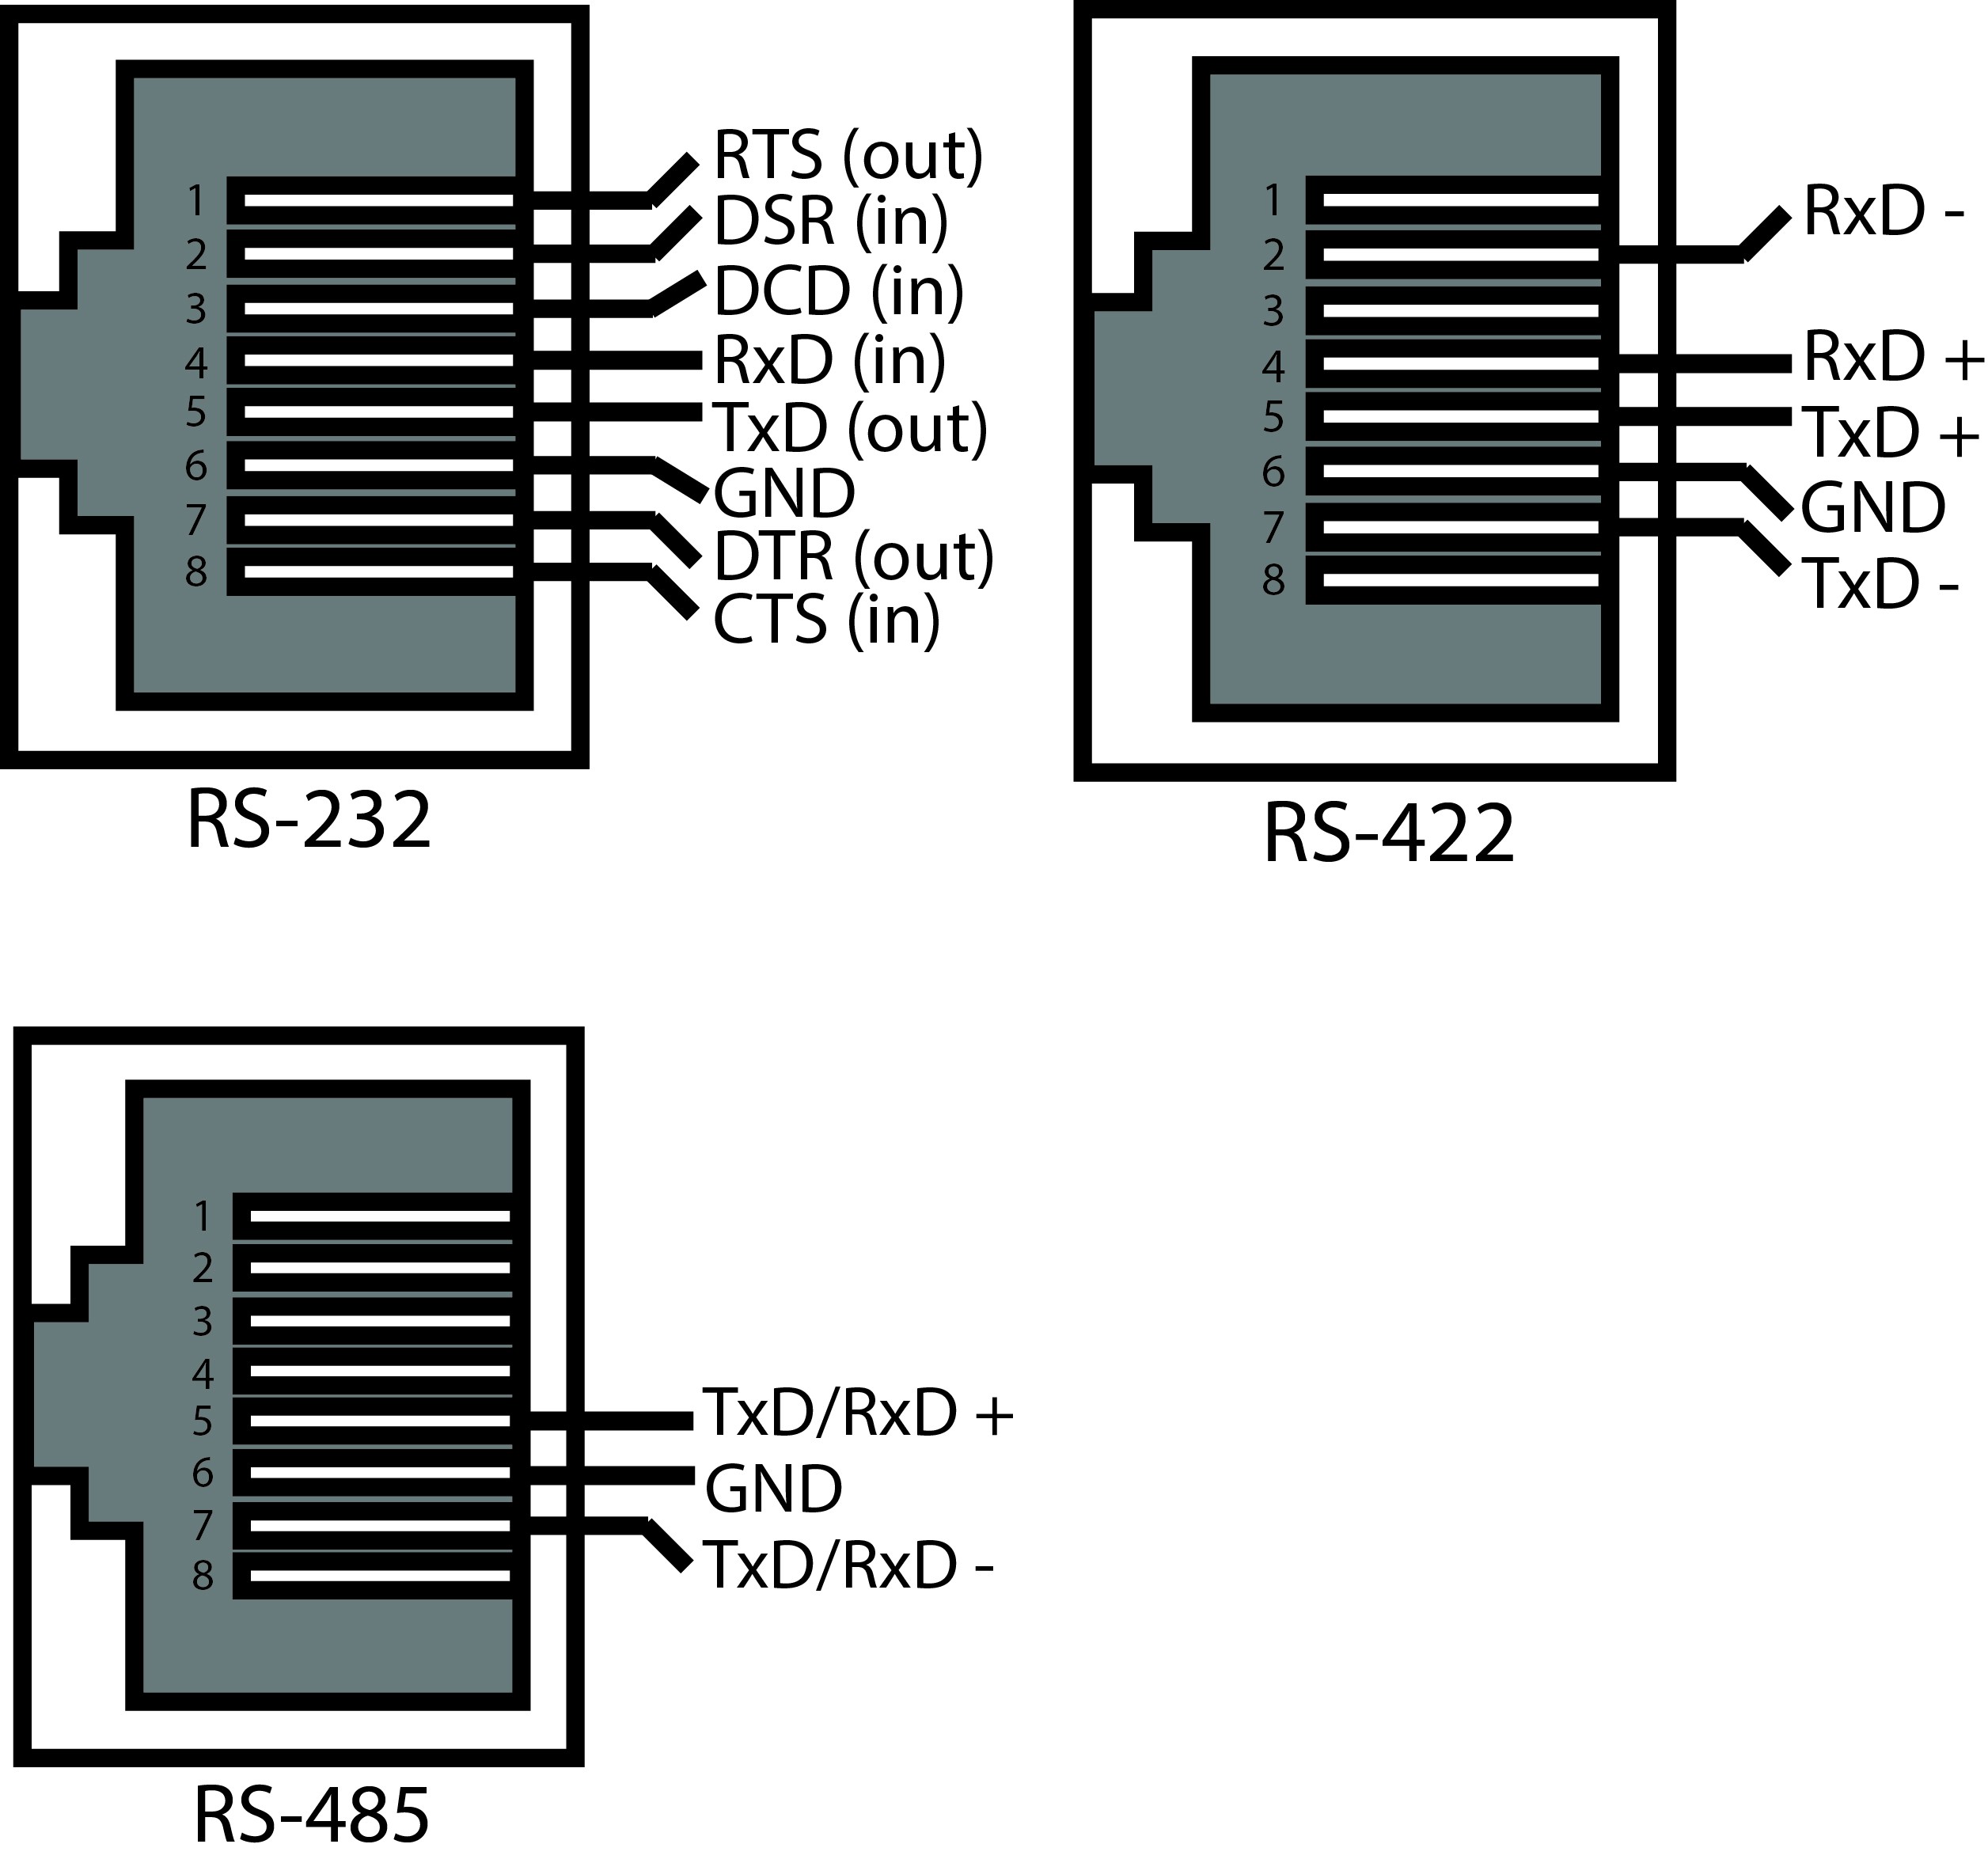 Modbus Rs485 Wiring Diagram | My Wiring DIagram